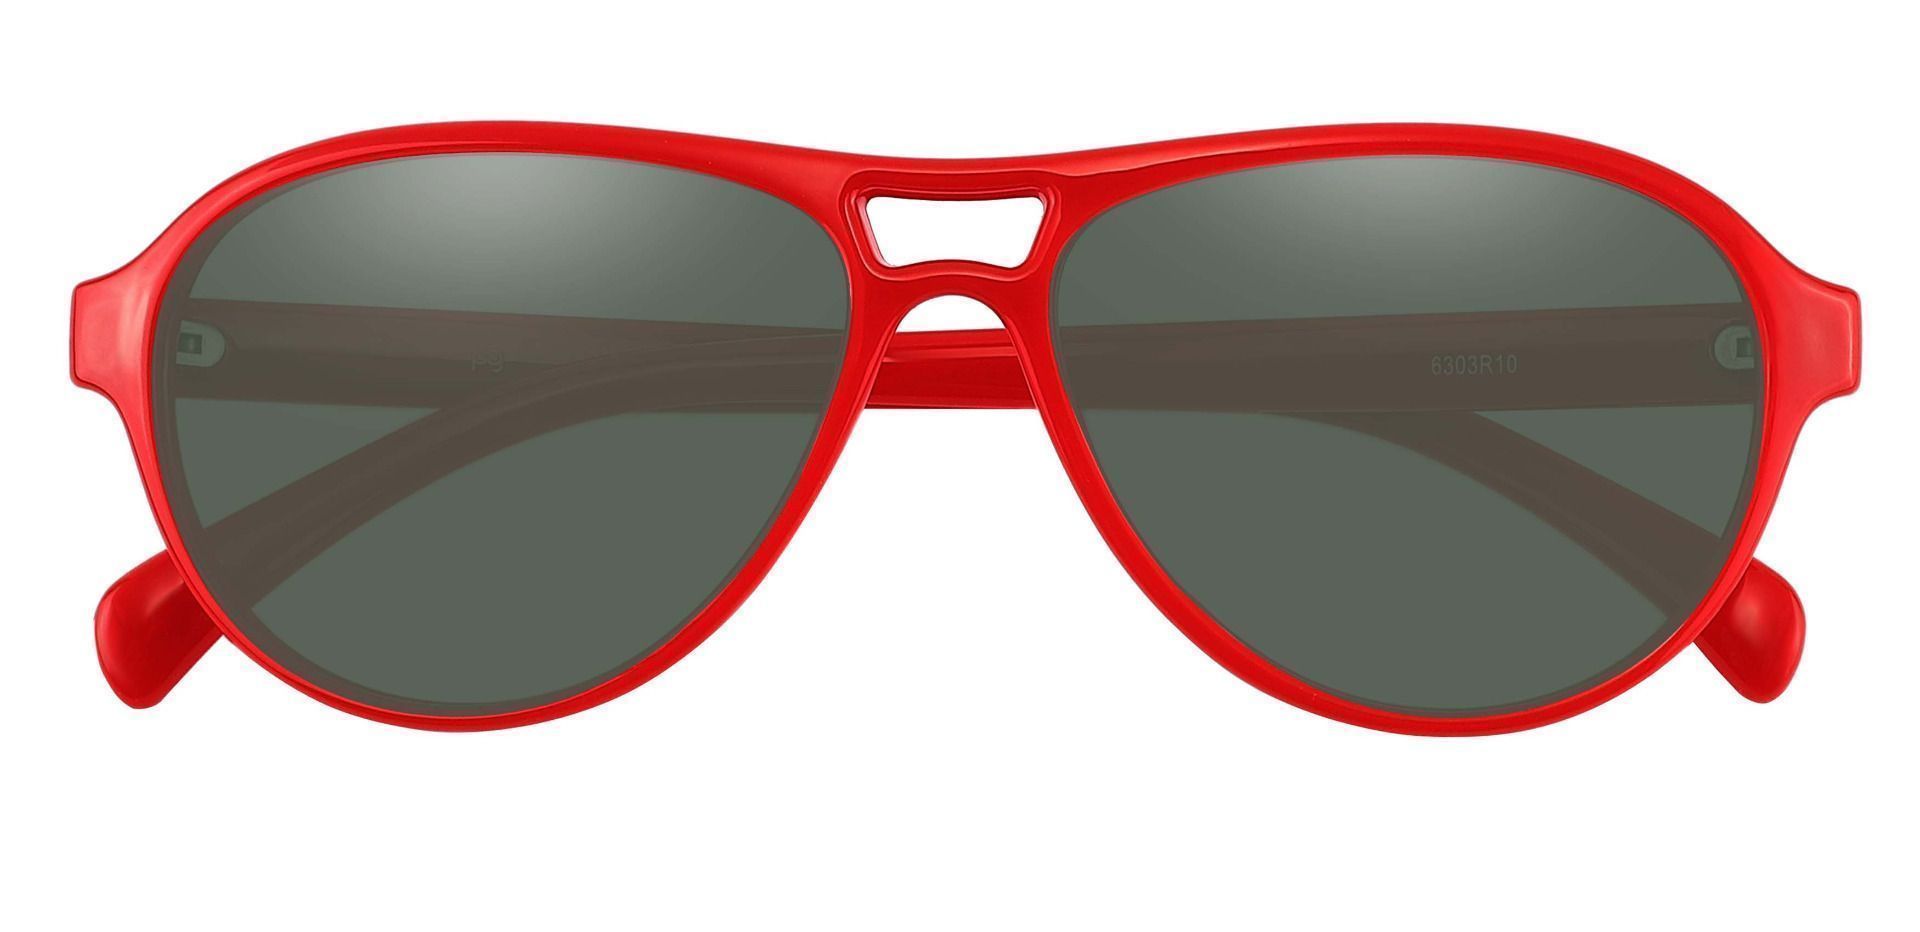 Sosa Aviator Lined Bifocal Sunglasses - Red Frame With Green Lenses